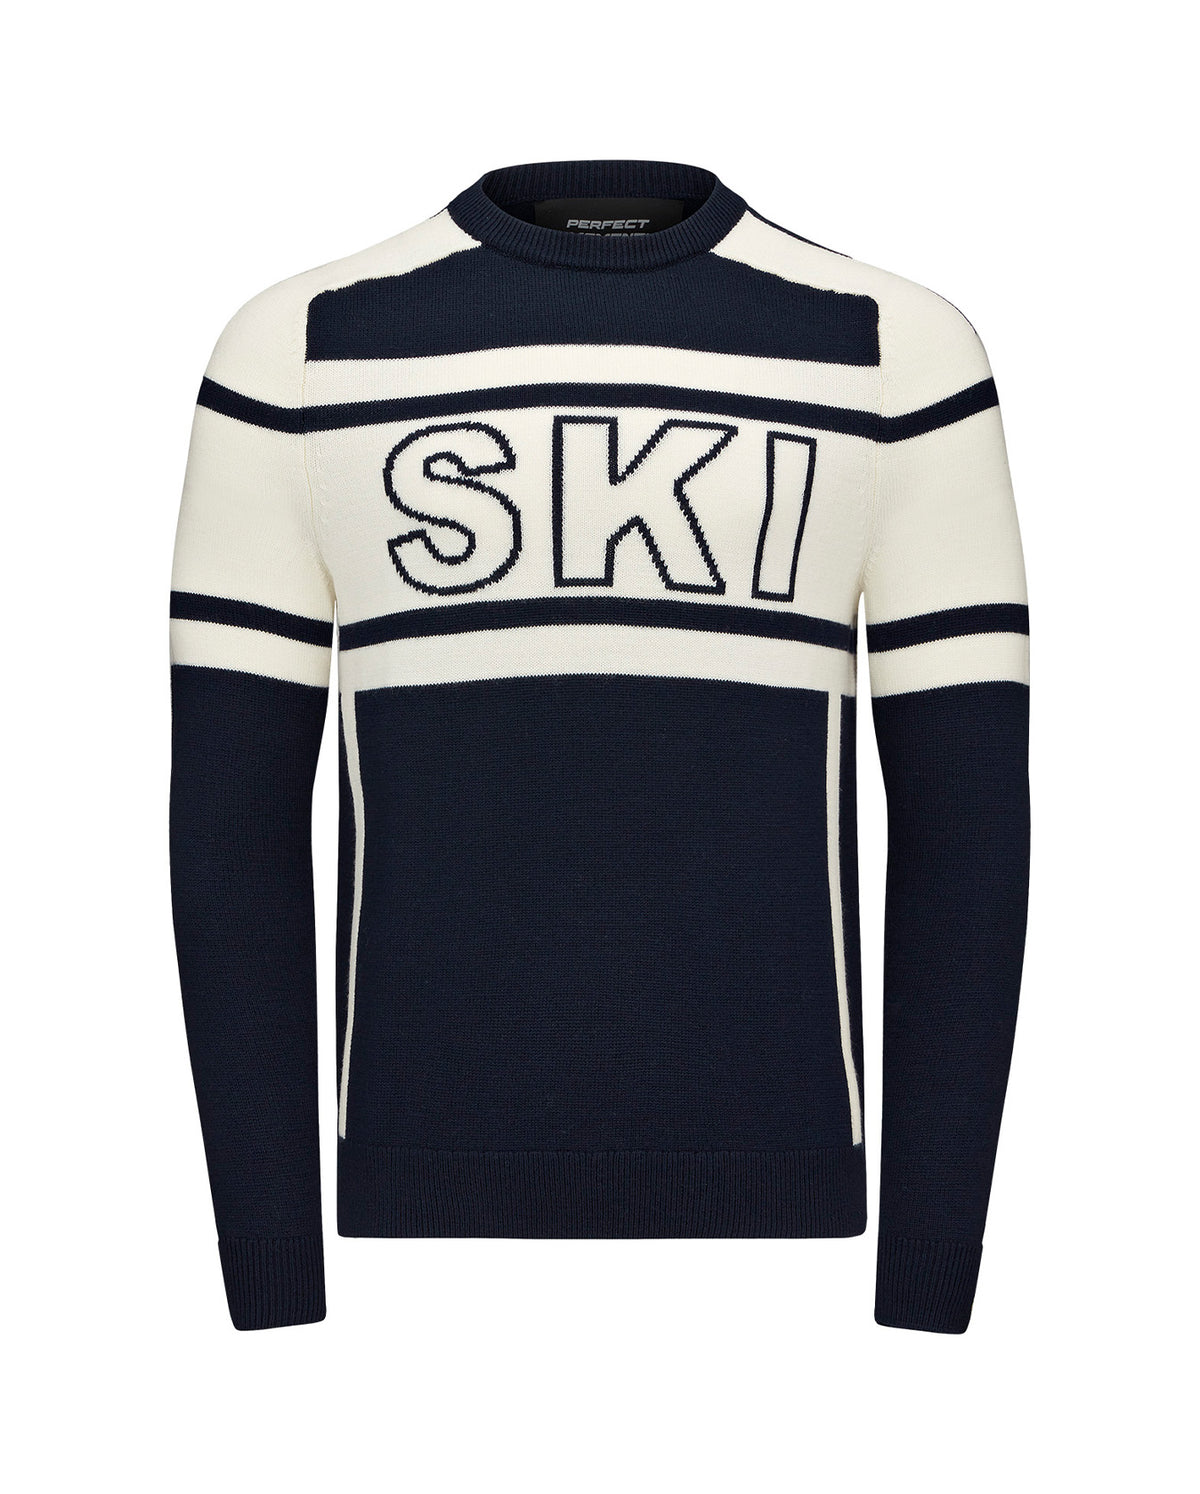 22 Ski Sweater - Navy